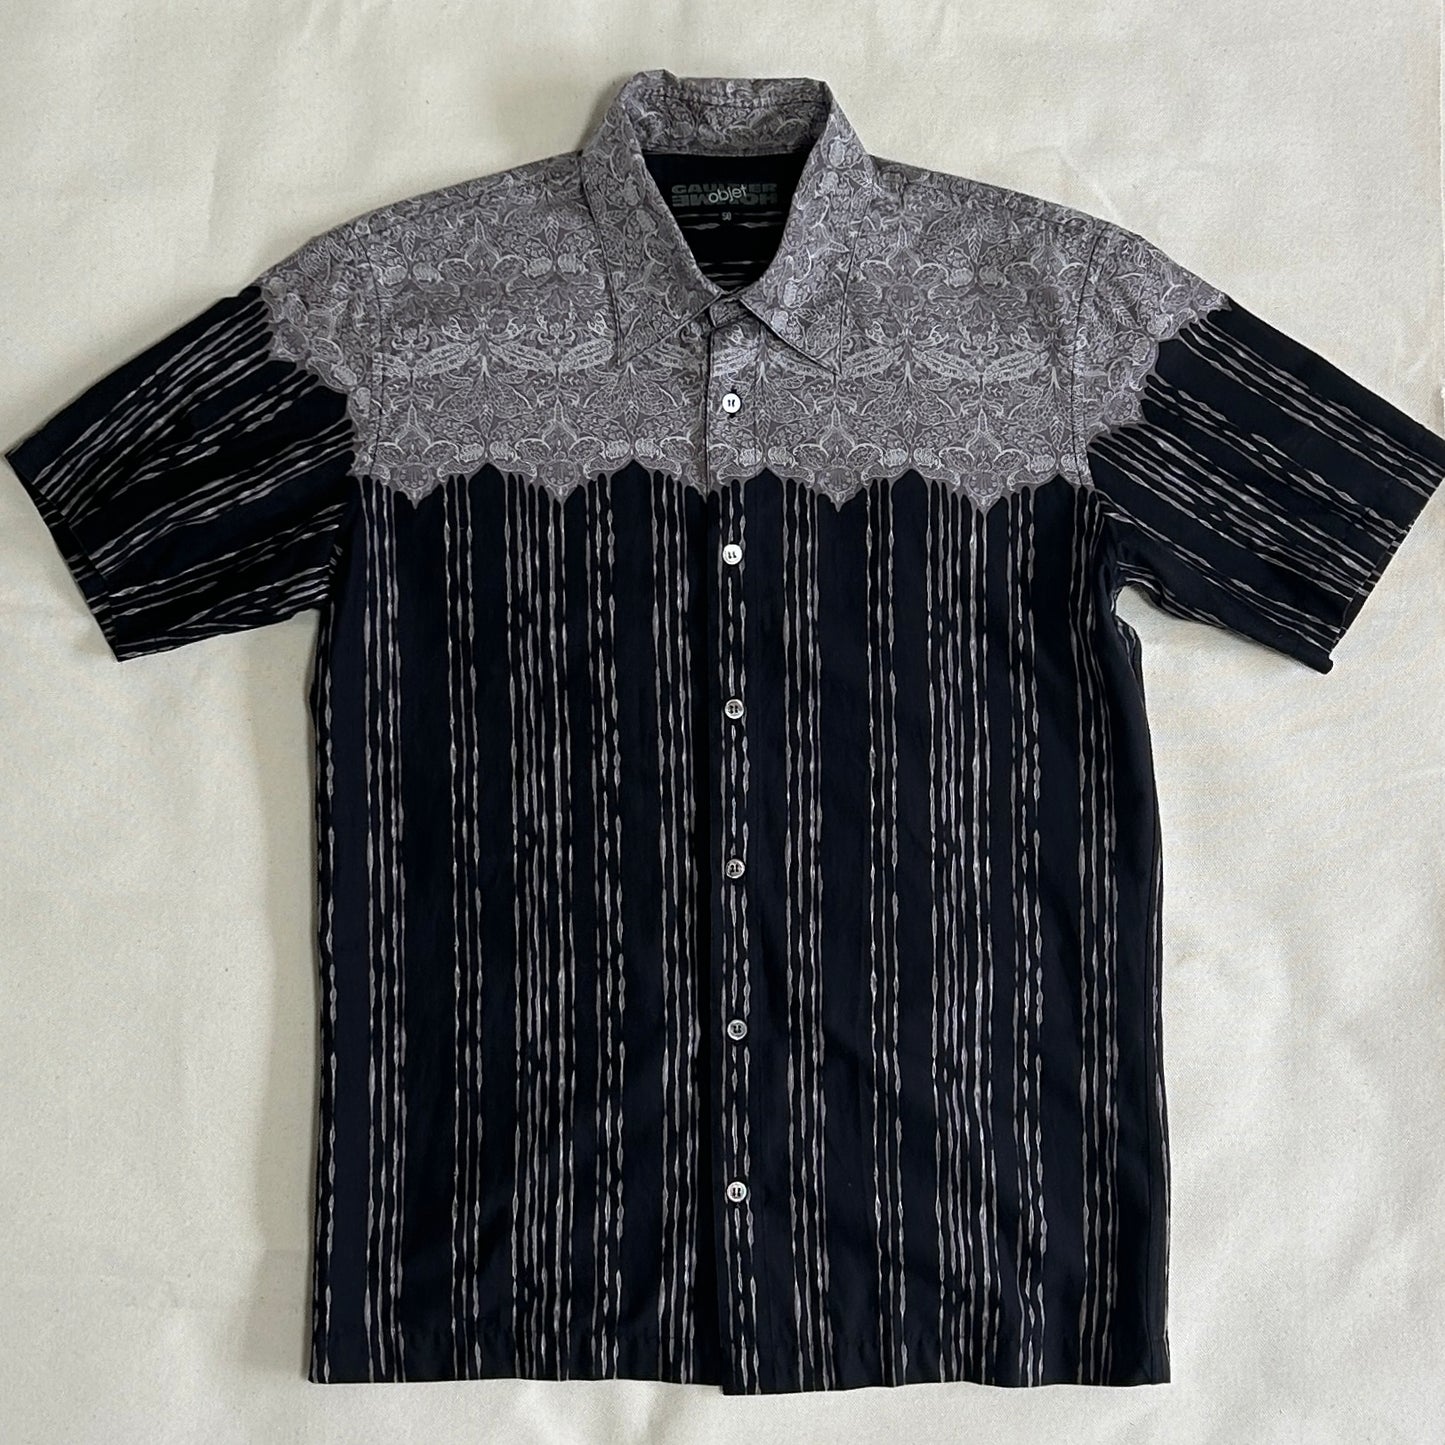 GAULTIER HOMME OBJET Full Pattern Shirt